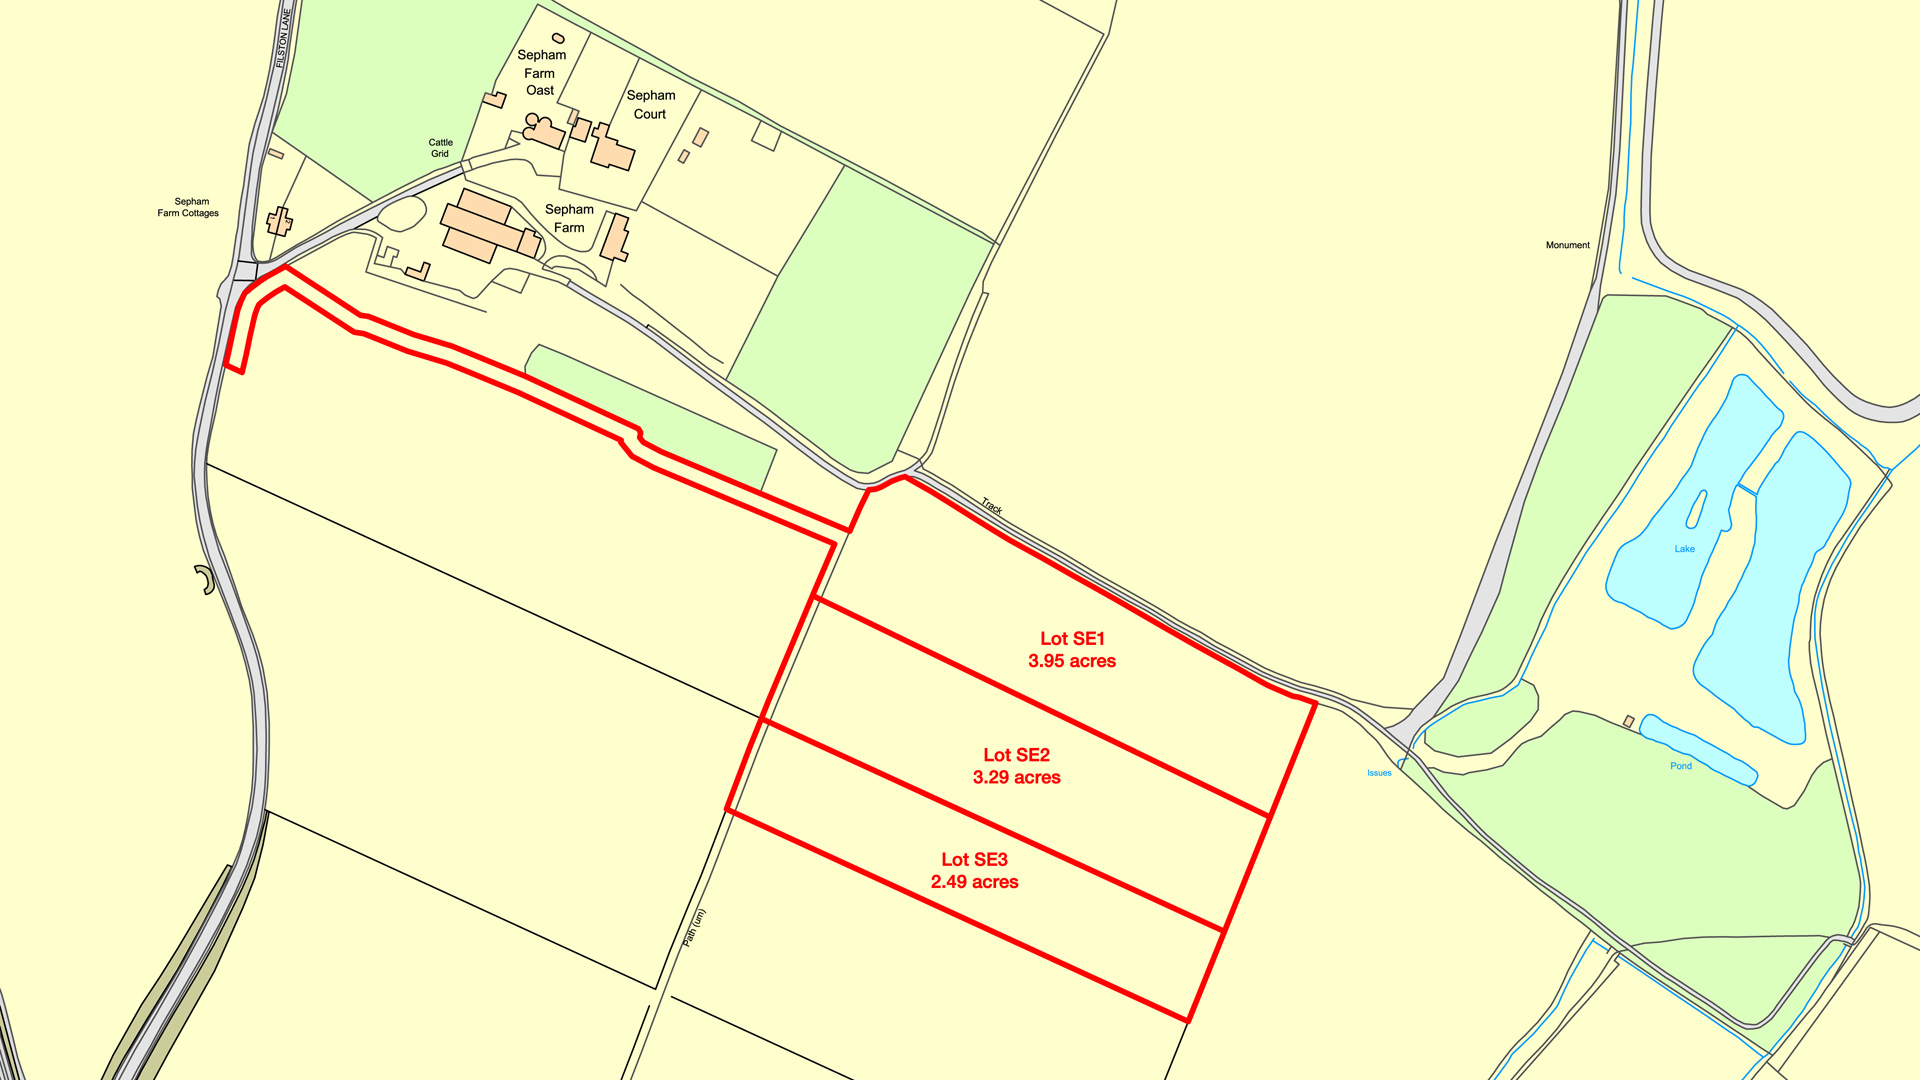 Land for sale in Otford, Sevenoaks site plan